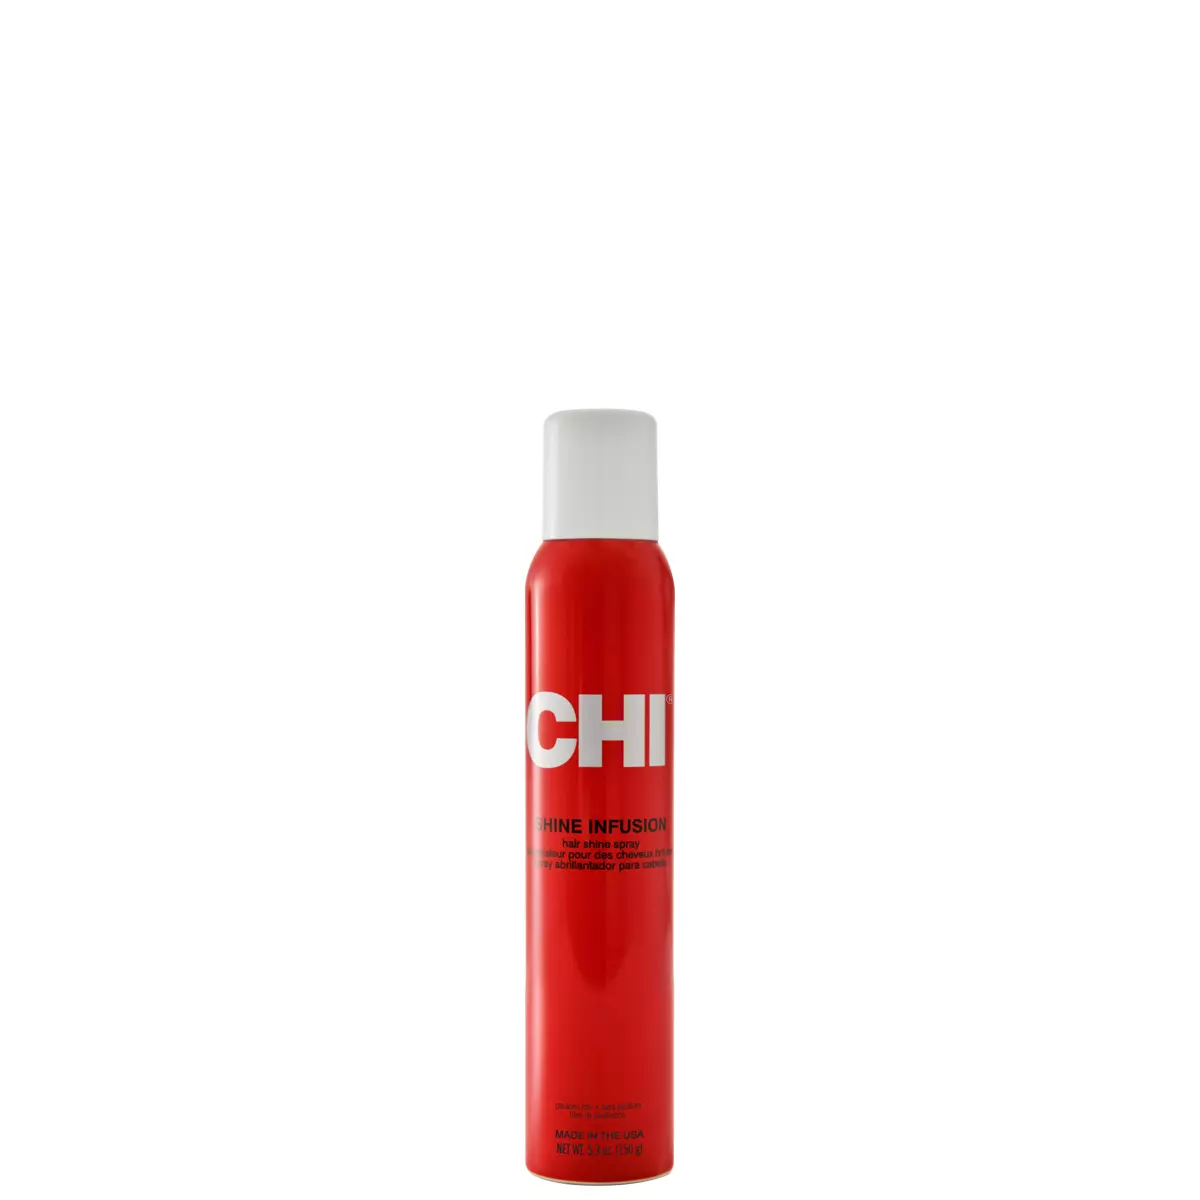 CHI Shine Infusion Hair shine spray